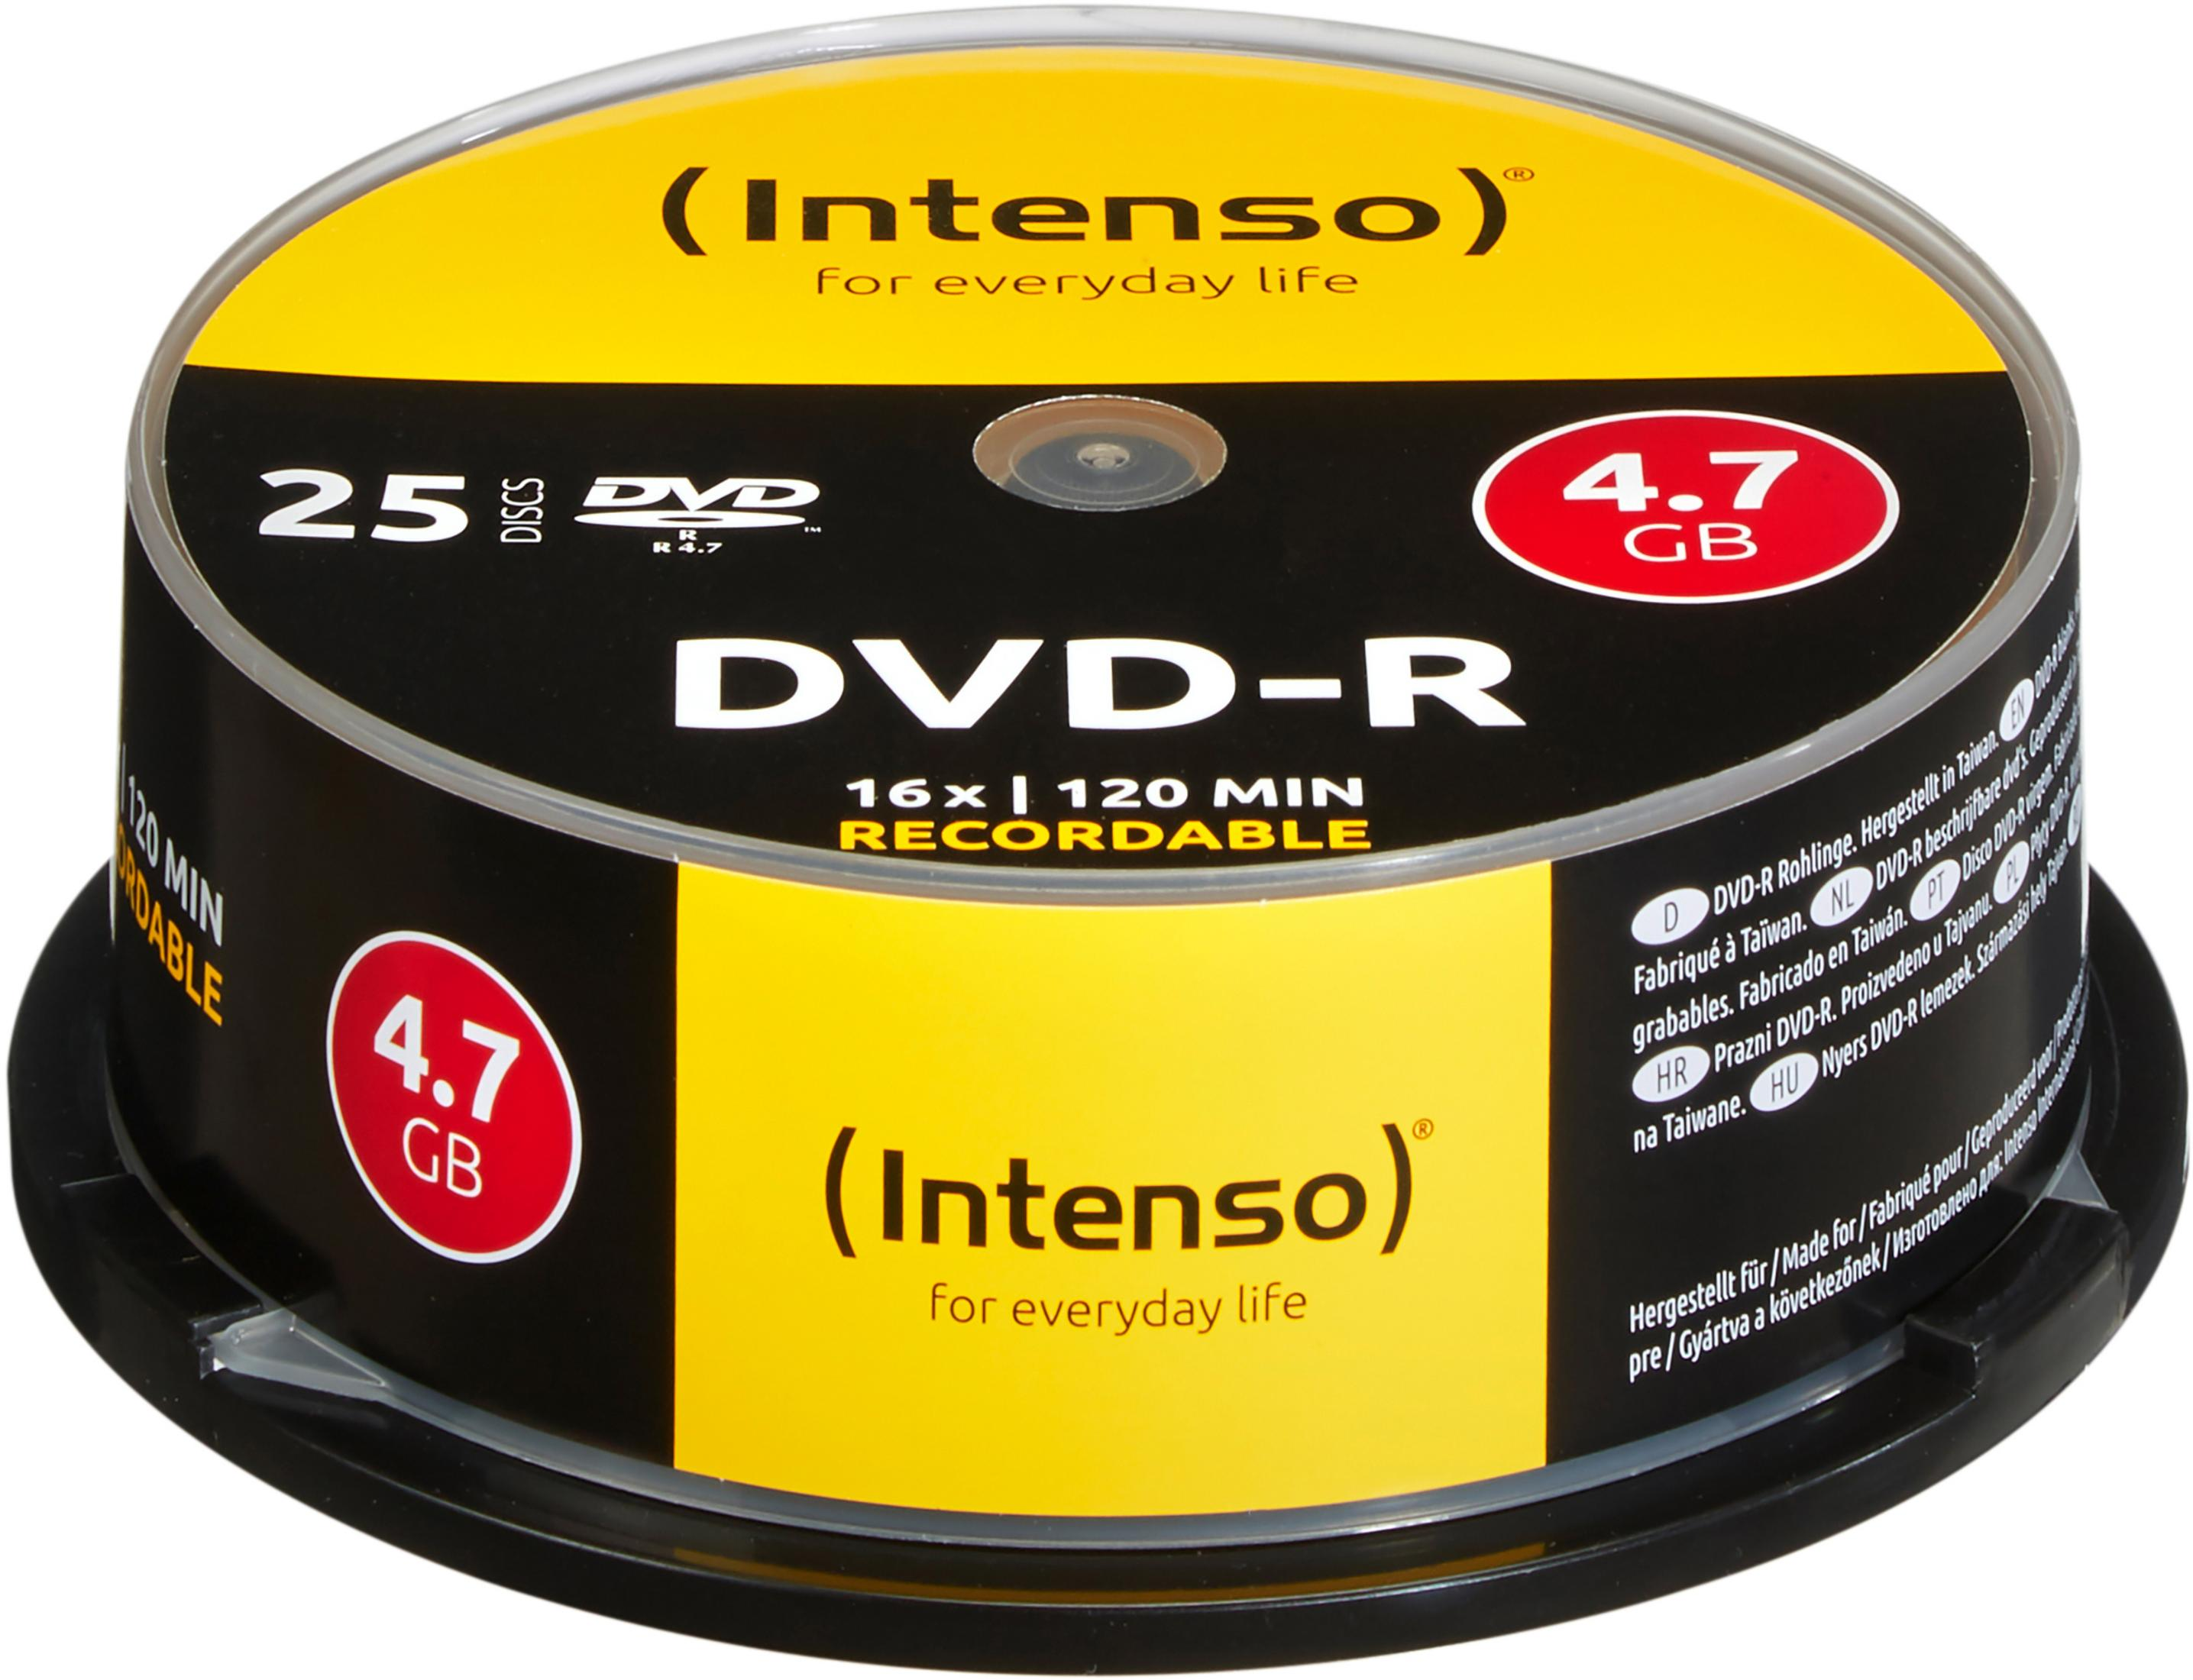 INTENSO 4101154 DVD-R 4,7GB 16X SP DVD-R 25ER Rohlinge